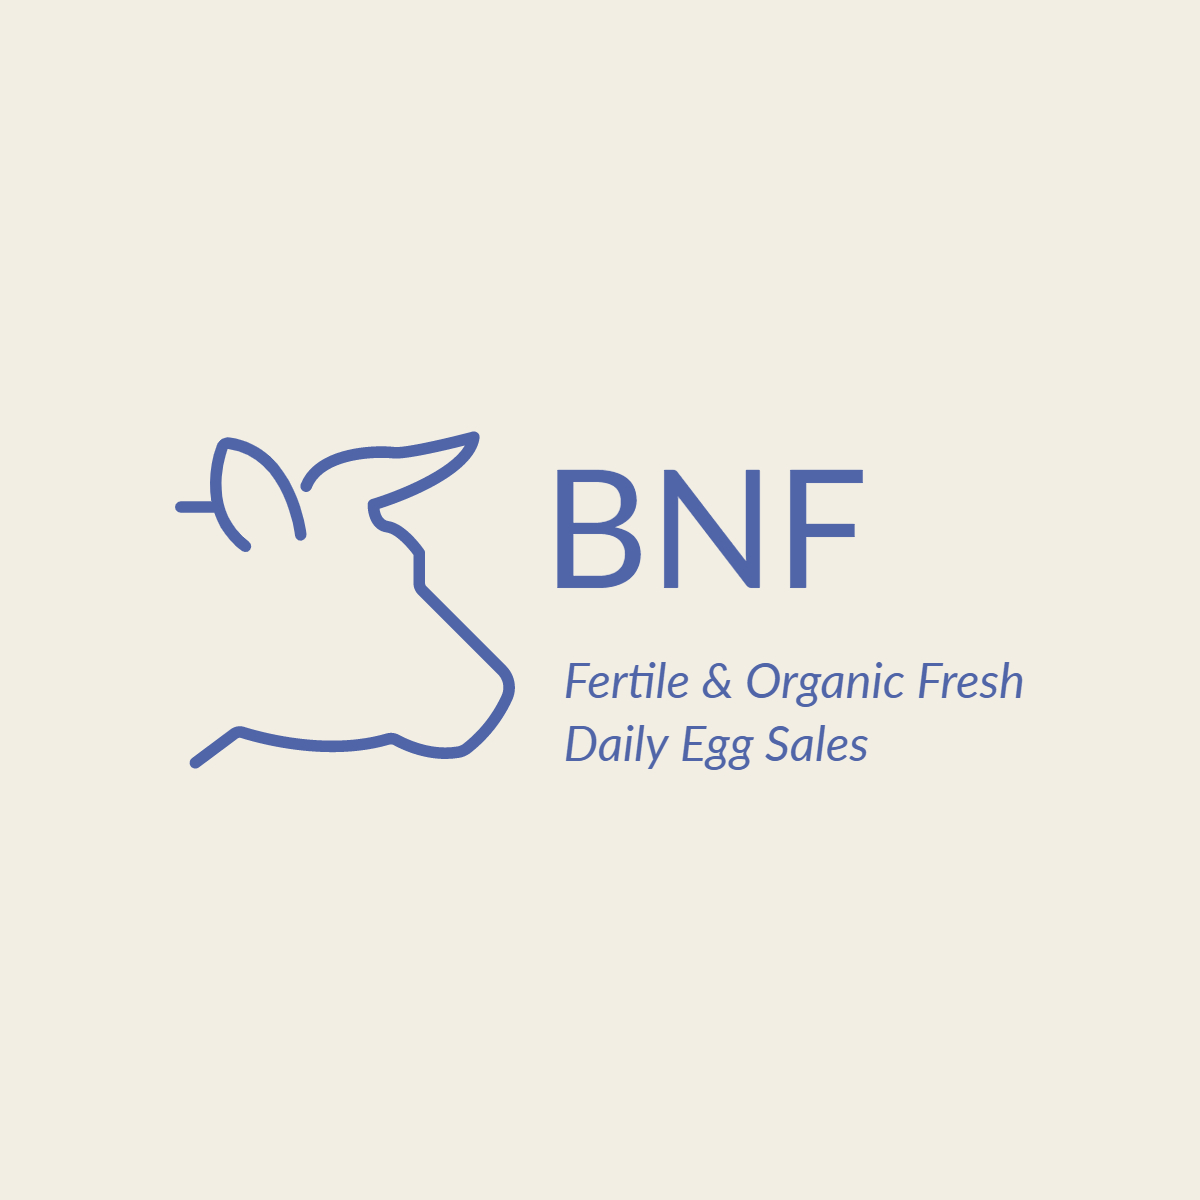 BNF letter farm logo preview image.